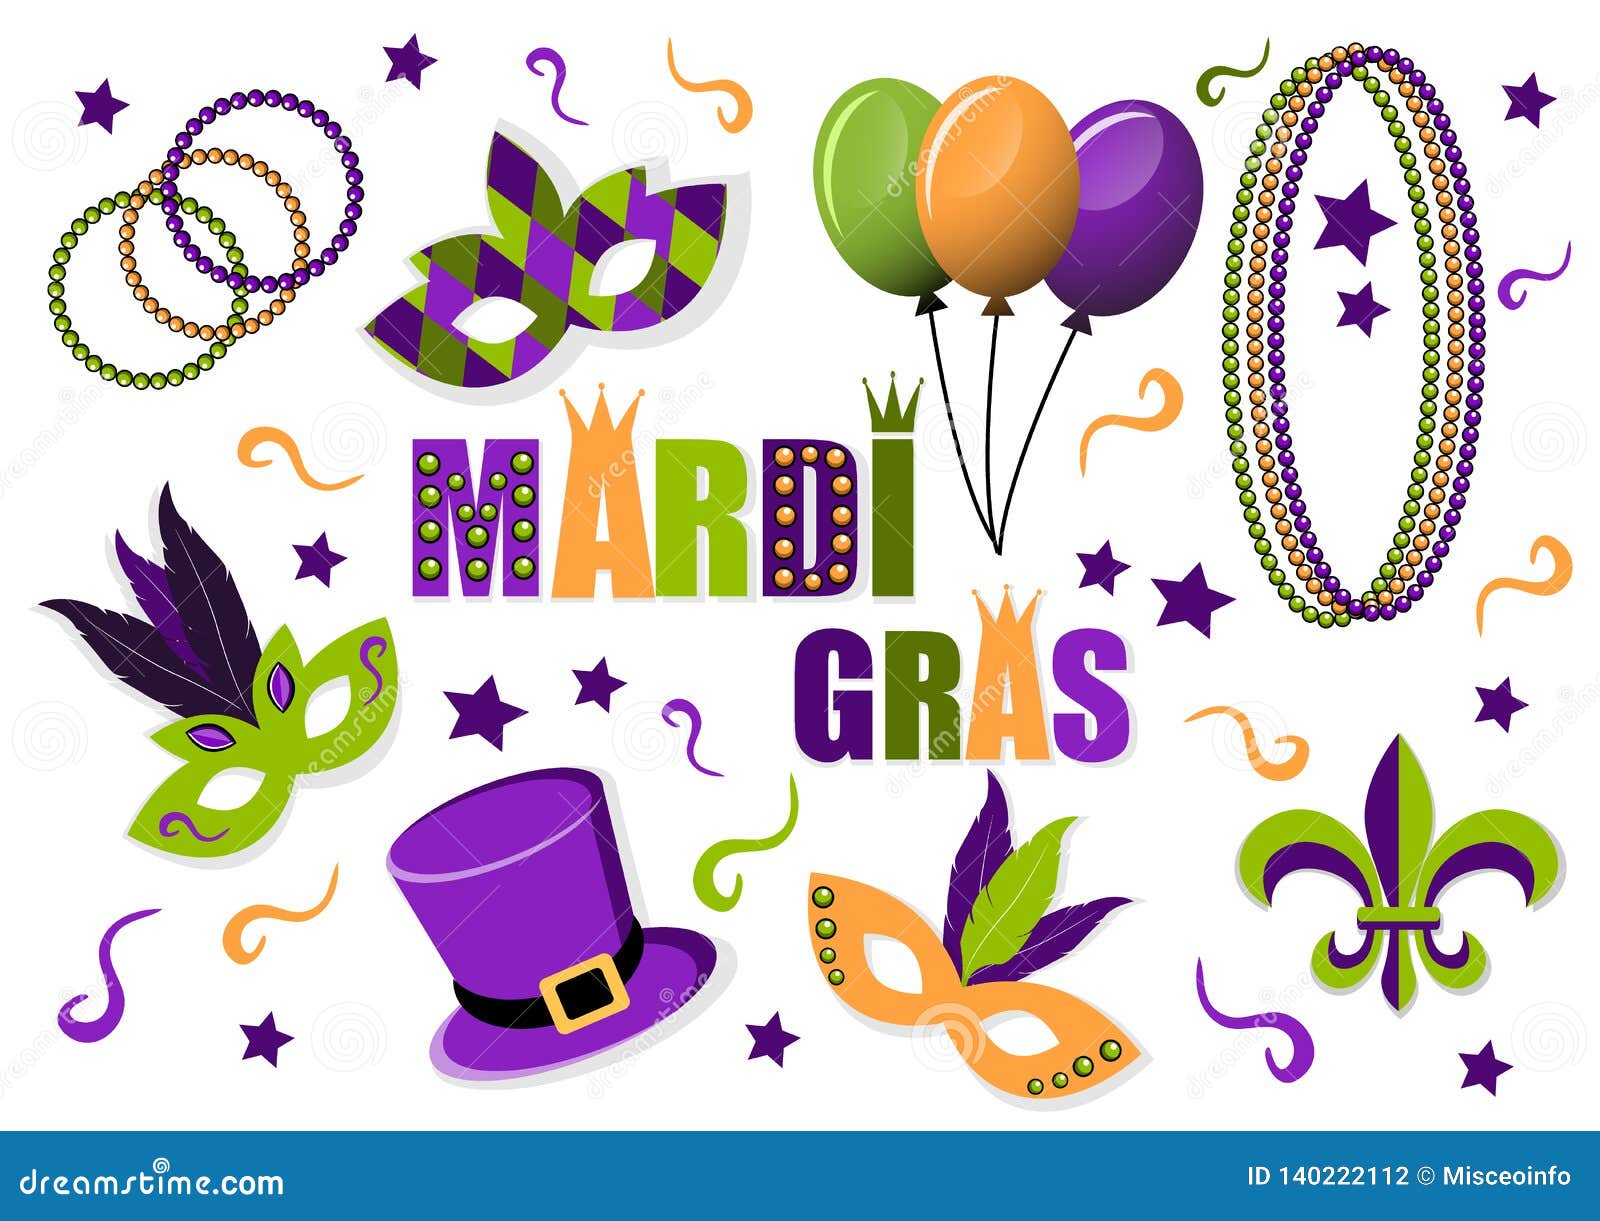 Mardi Gras Stickers Set Vector Download